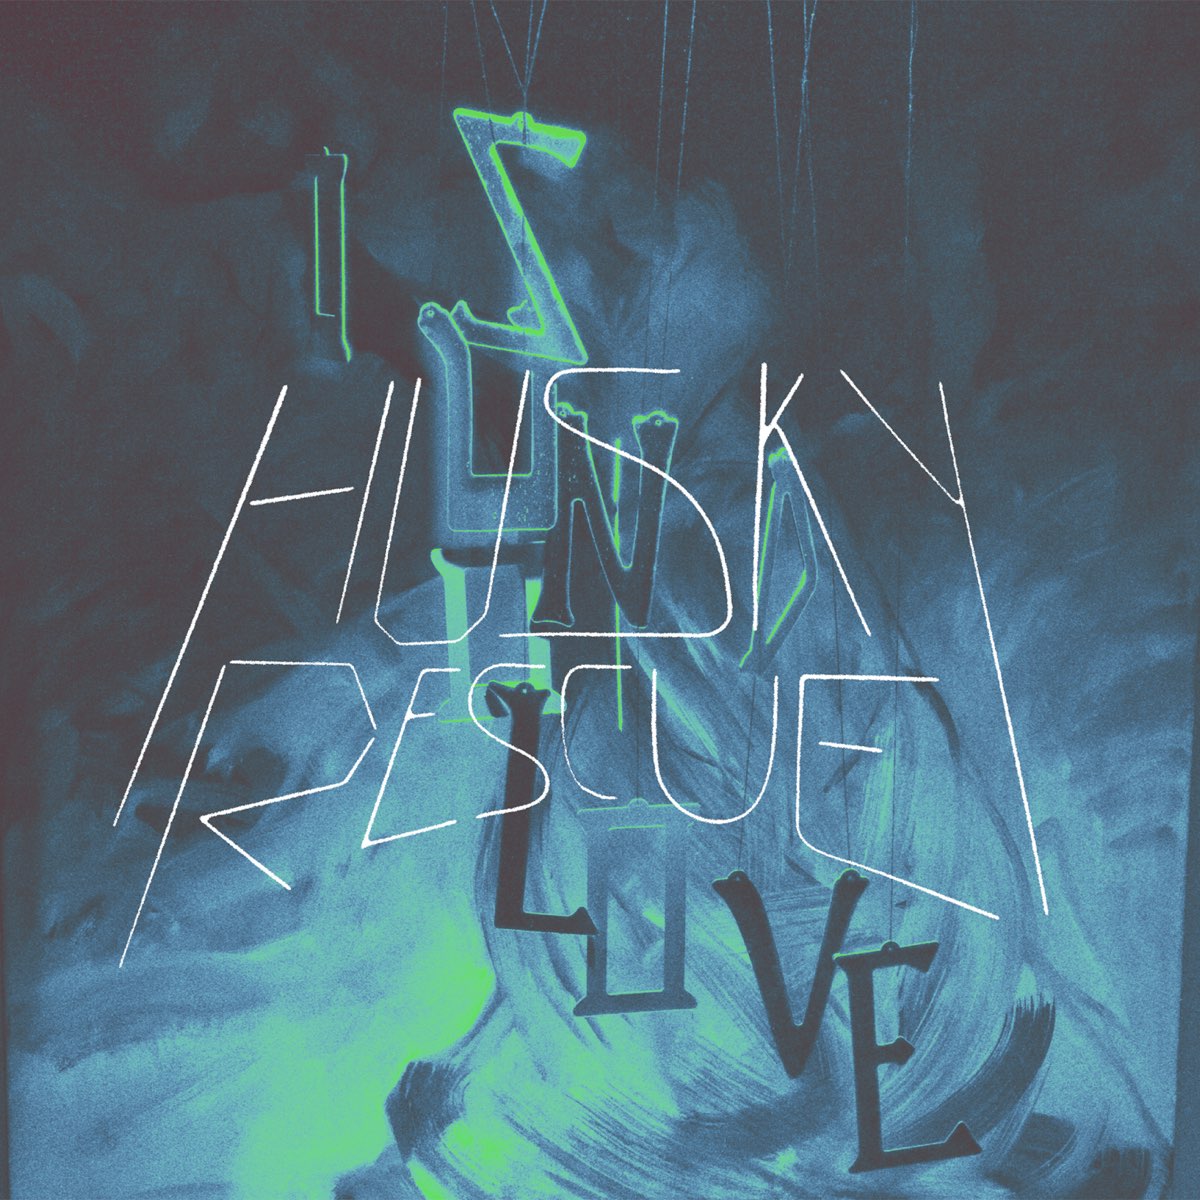 Husky Rescue Sound of Love. Love Sound. Группа Husky Rescue. Husky Rescue - ship of Light.